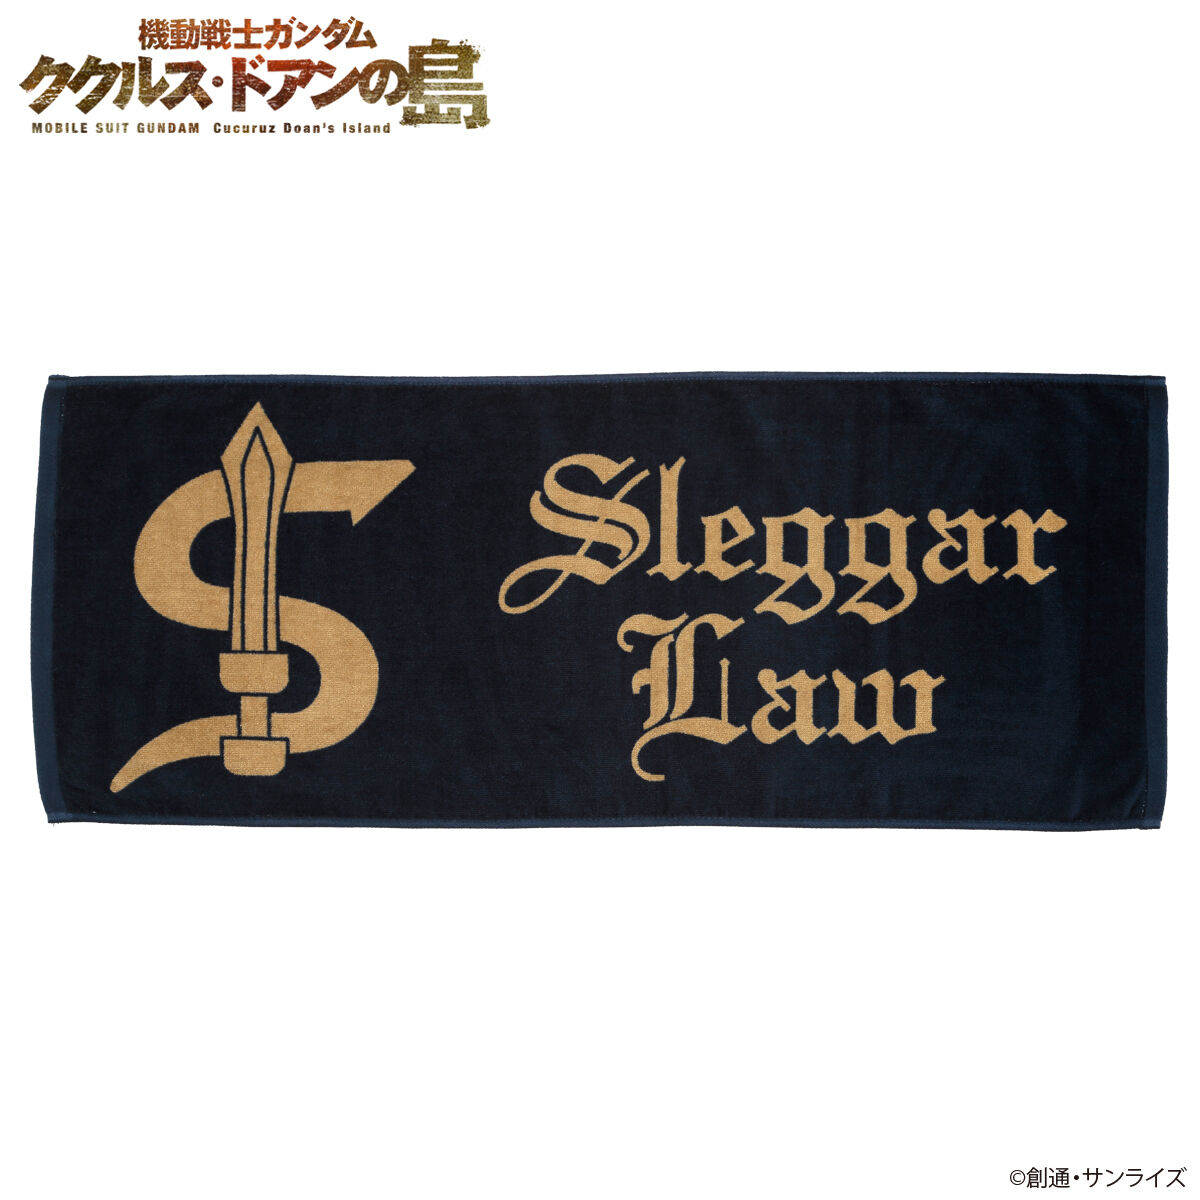 Mobile Suit Gundam Cucuruz: Doan's Island BLUE Series Sleggar Law Face Towel